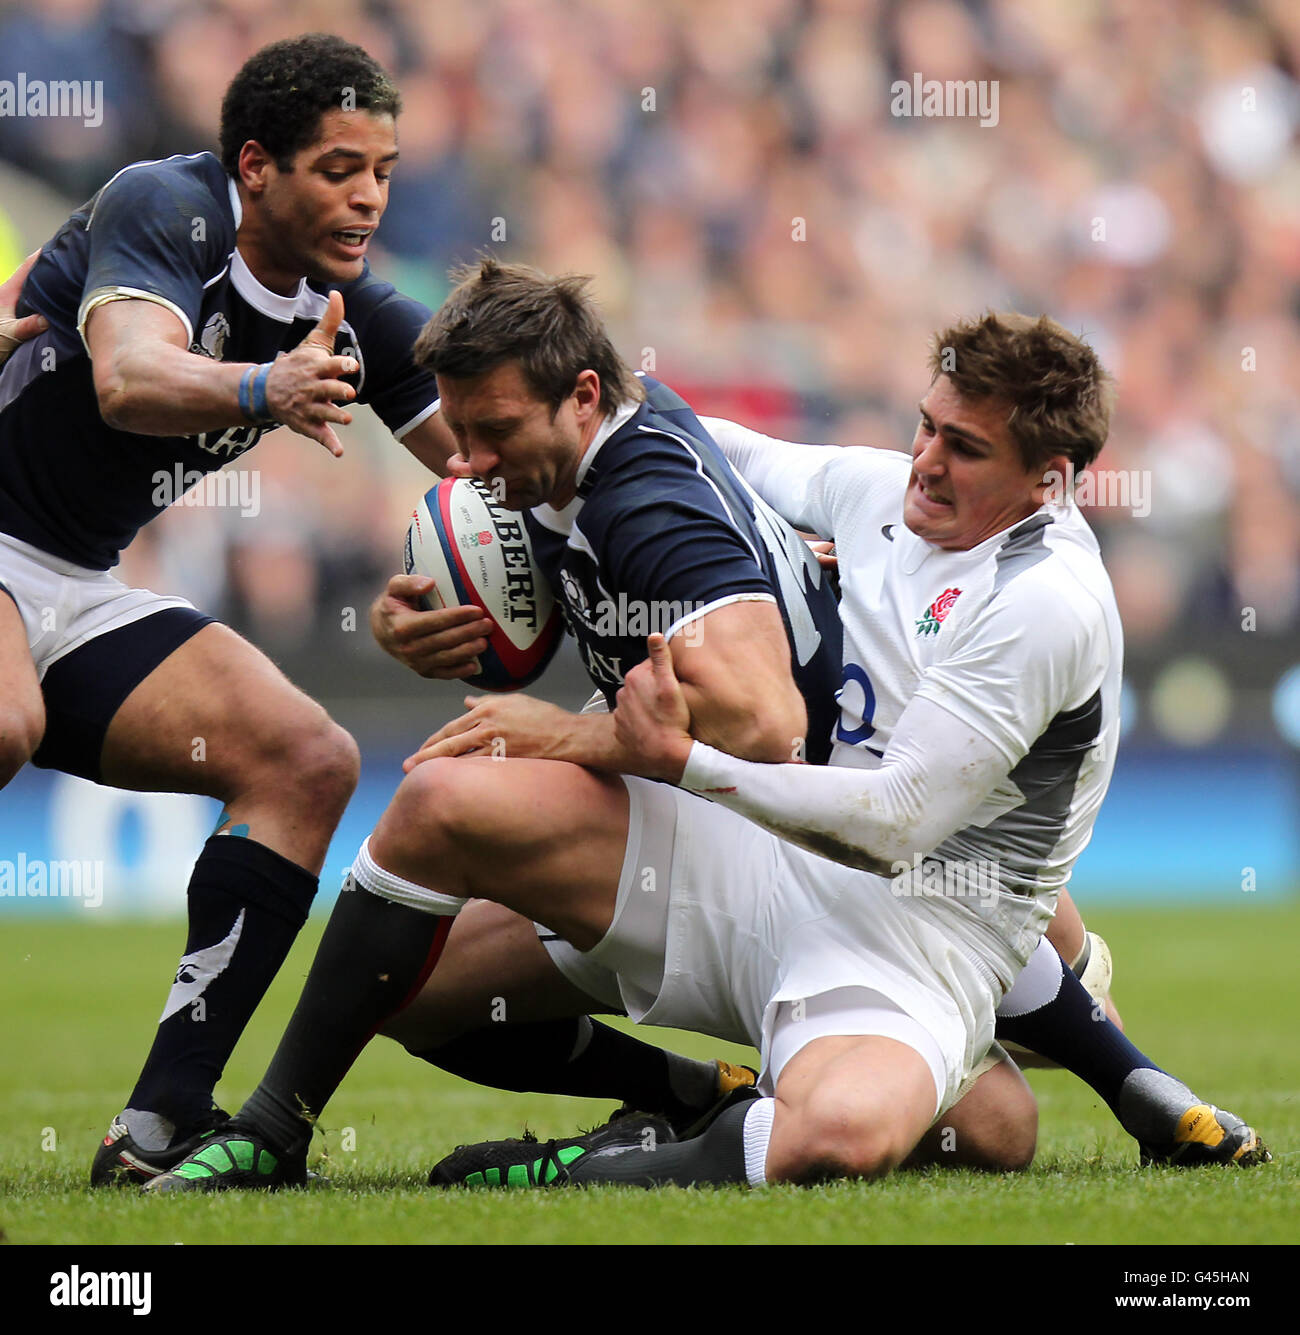 Rugby Union - RBS 6 Nations Championship 2011 - England v Scotland - Twickenham. England's Toby Flood (right) tackles Scotland's Simon Danielli Stock Photo